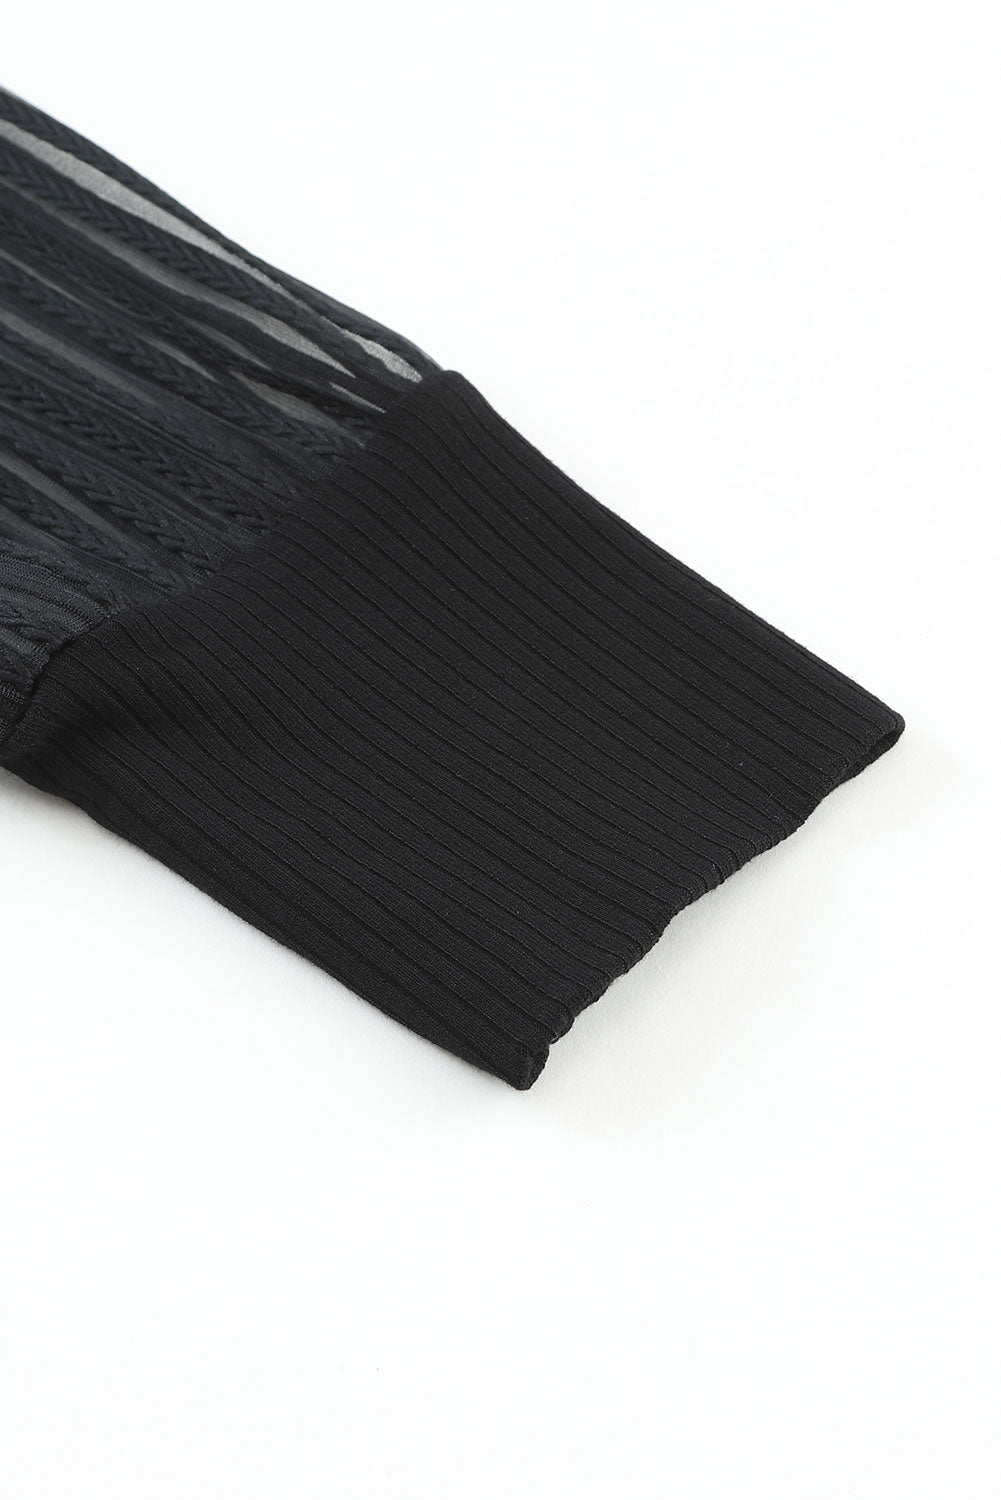 Black Striped Mesh Long Sleeve Crewneck Ribbed Top-13